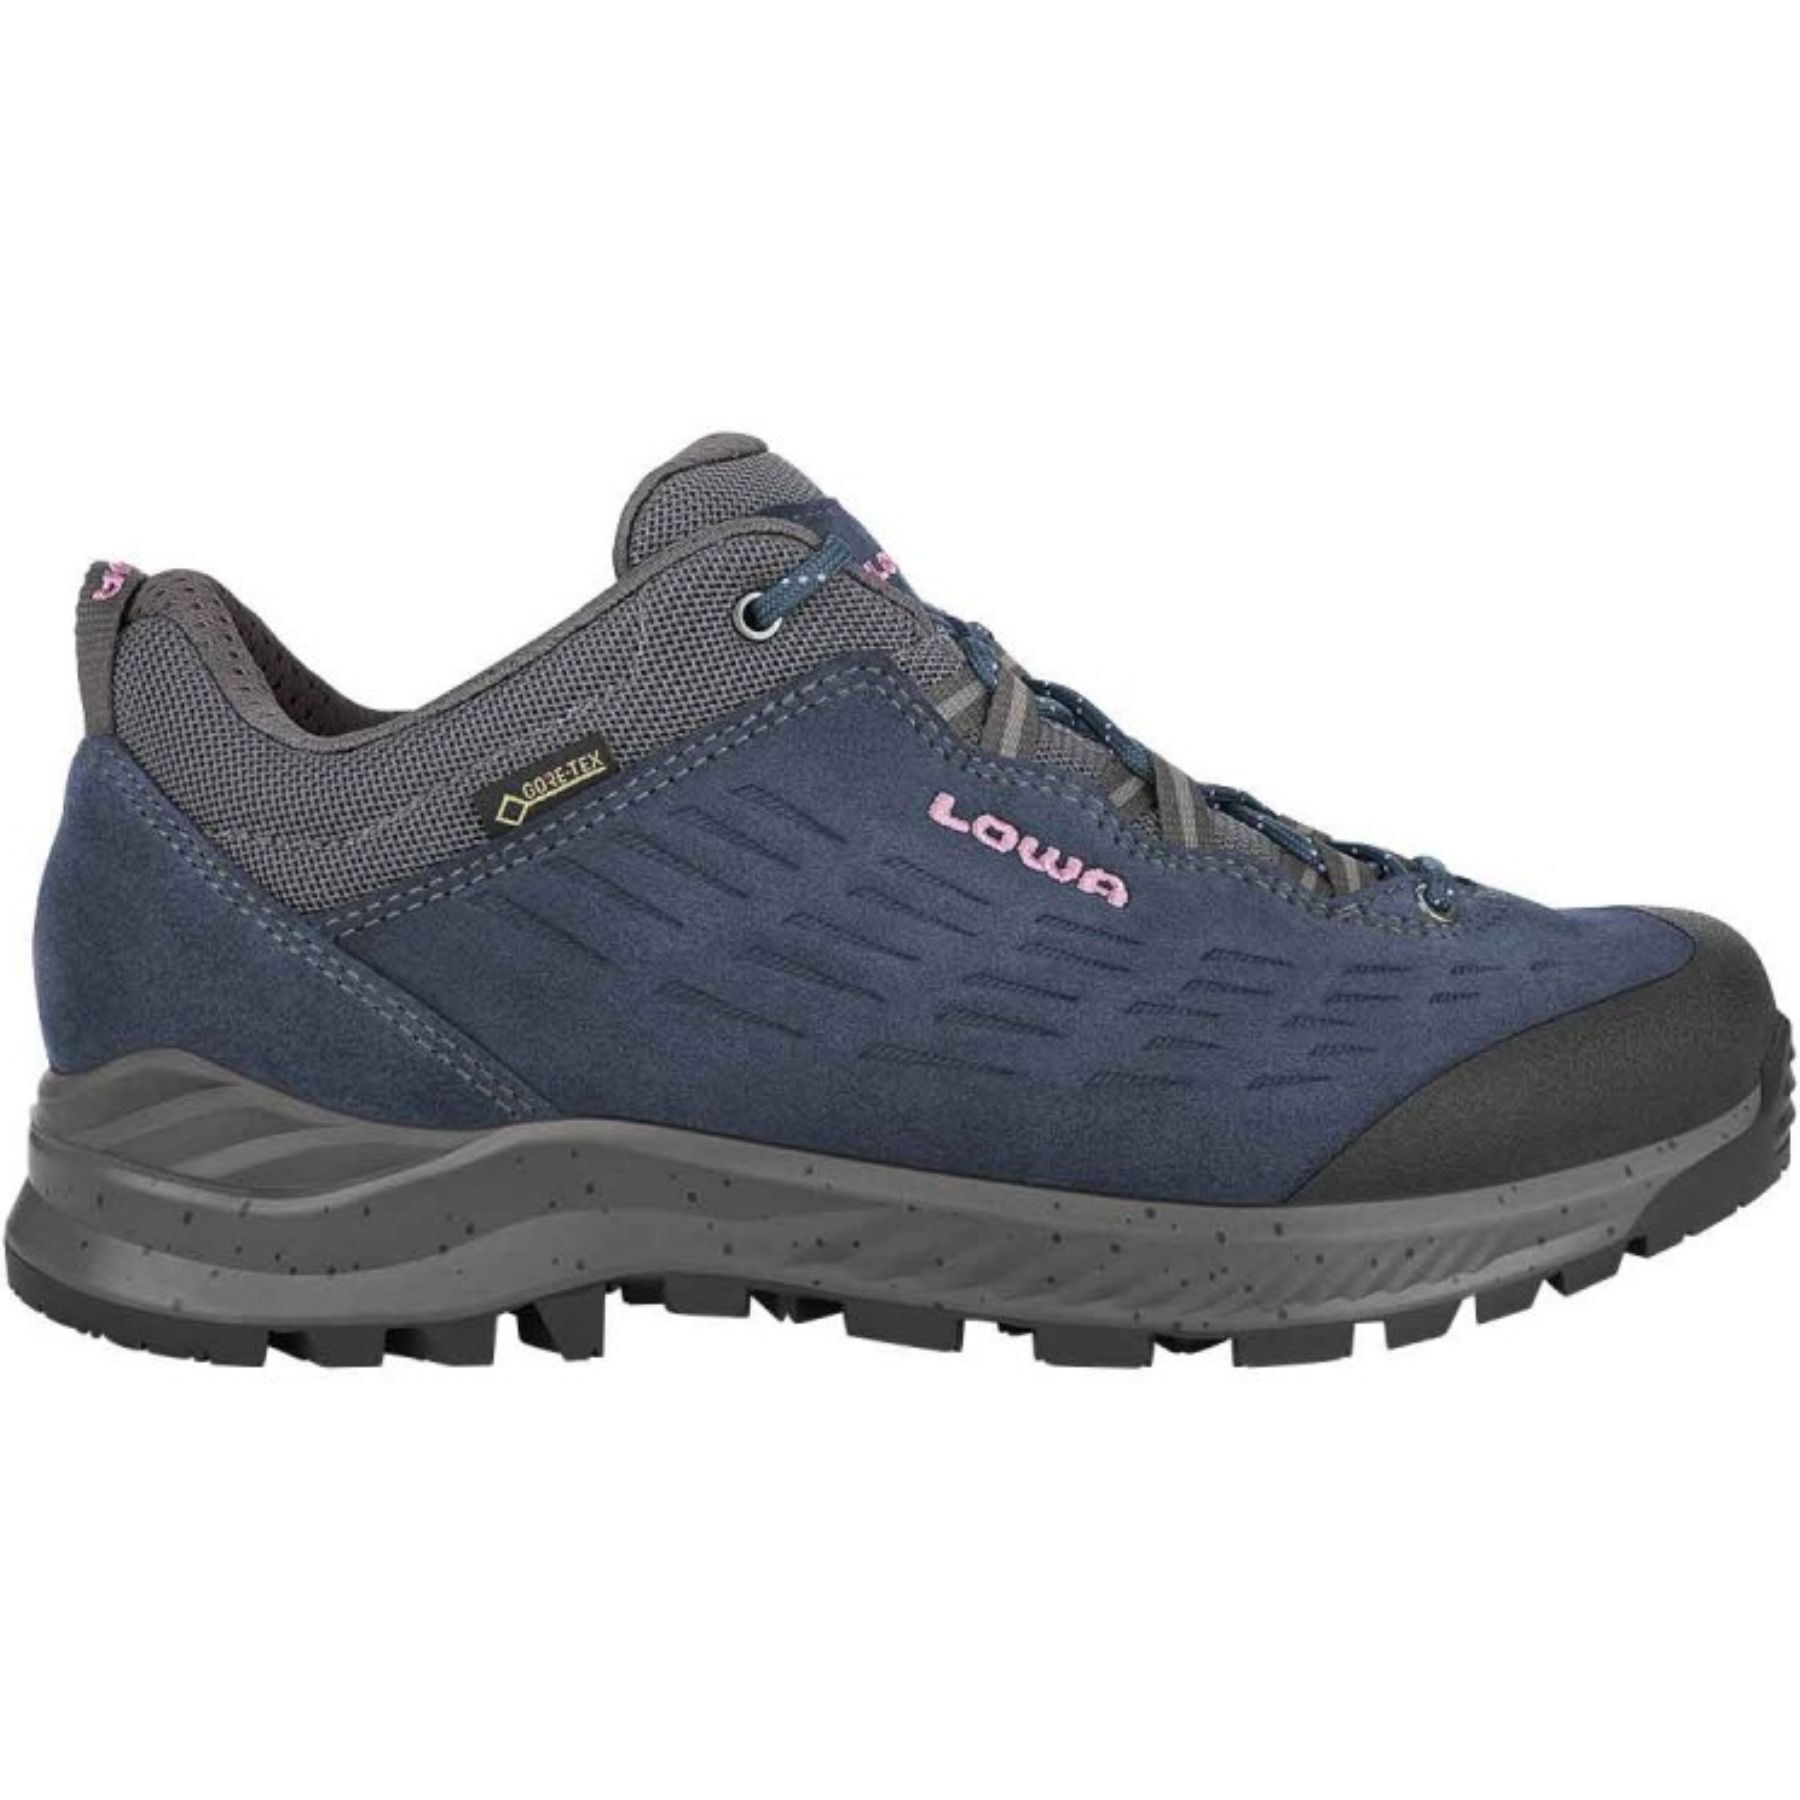 Lowa Explorer GTX Lo Ws - Walking Boots - Women's